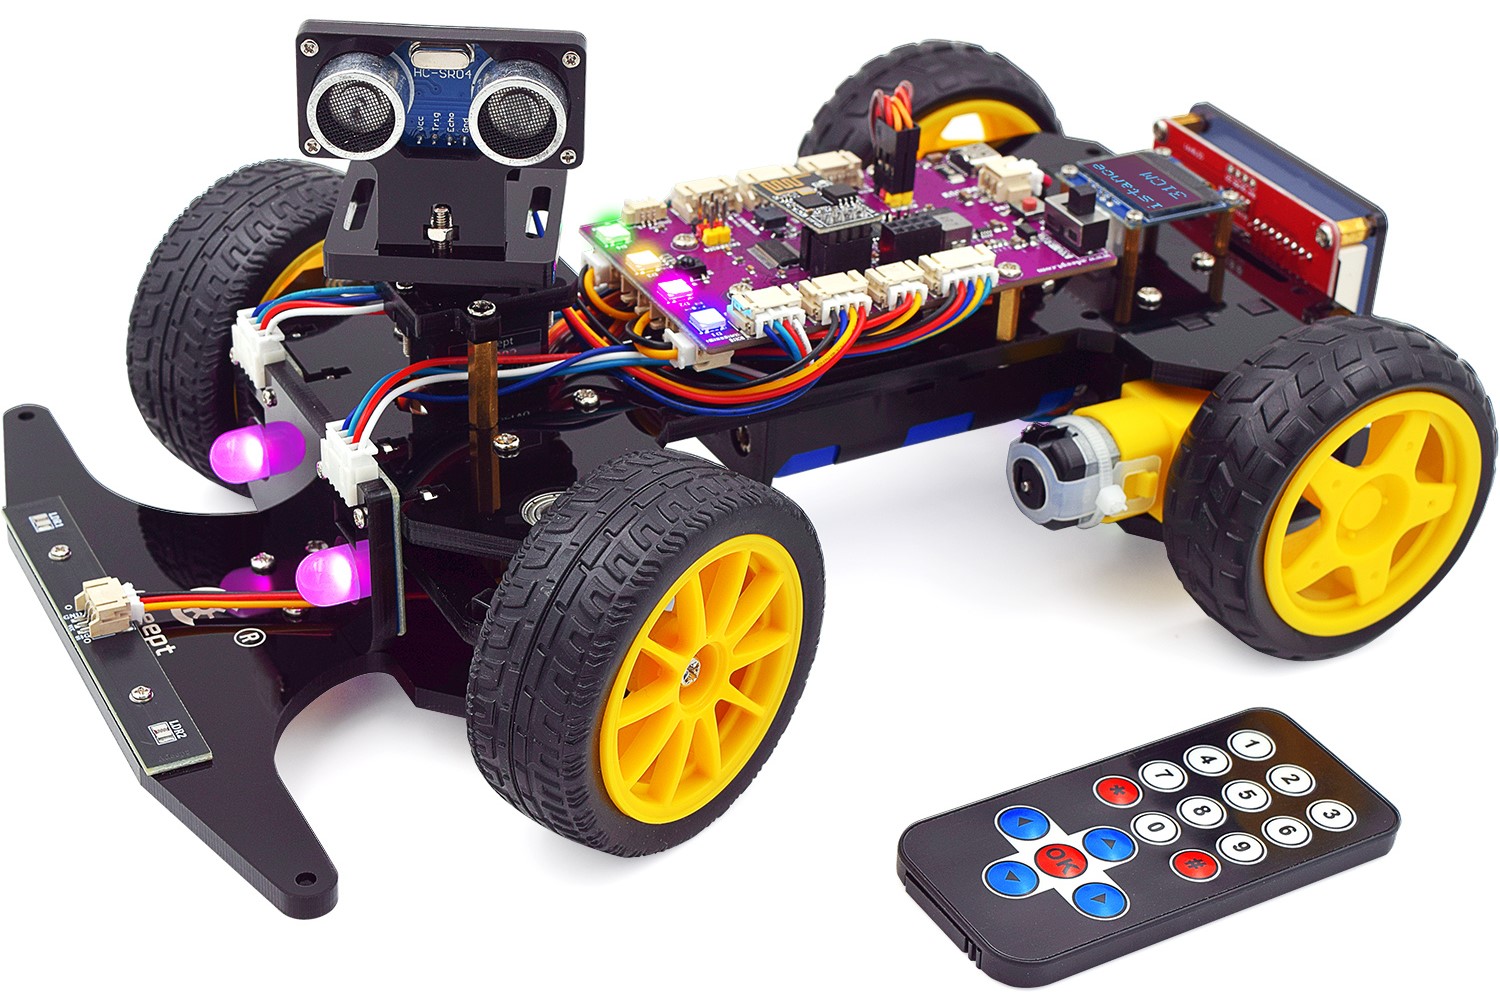 Mini 2wd Smart Robot Car Kit Nano, Programmable, Obstacle Avoidance